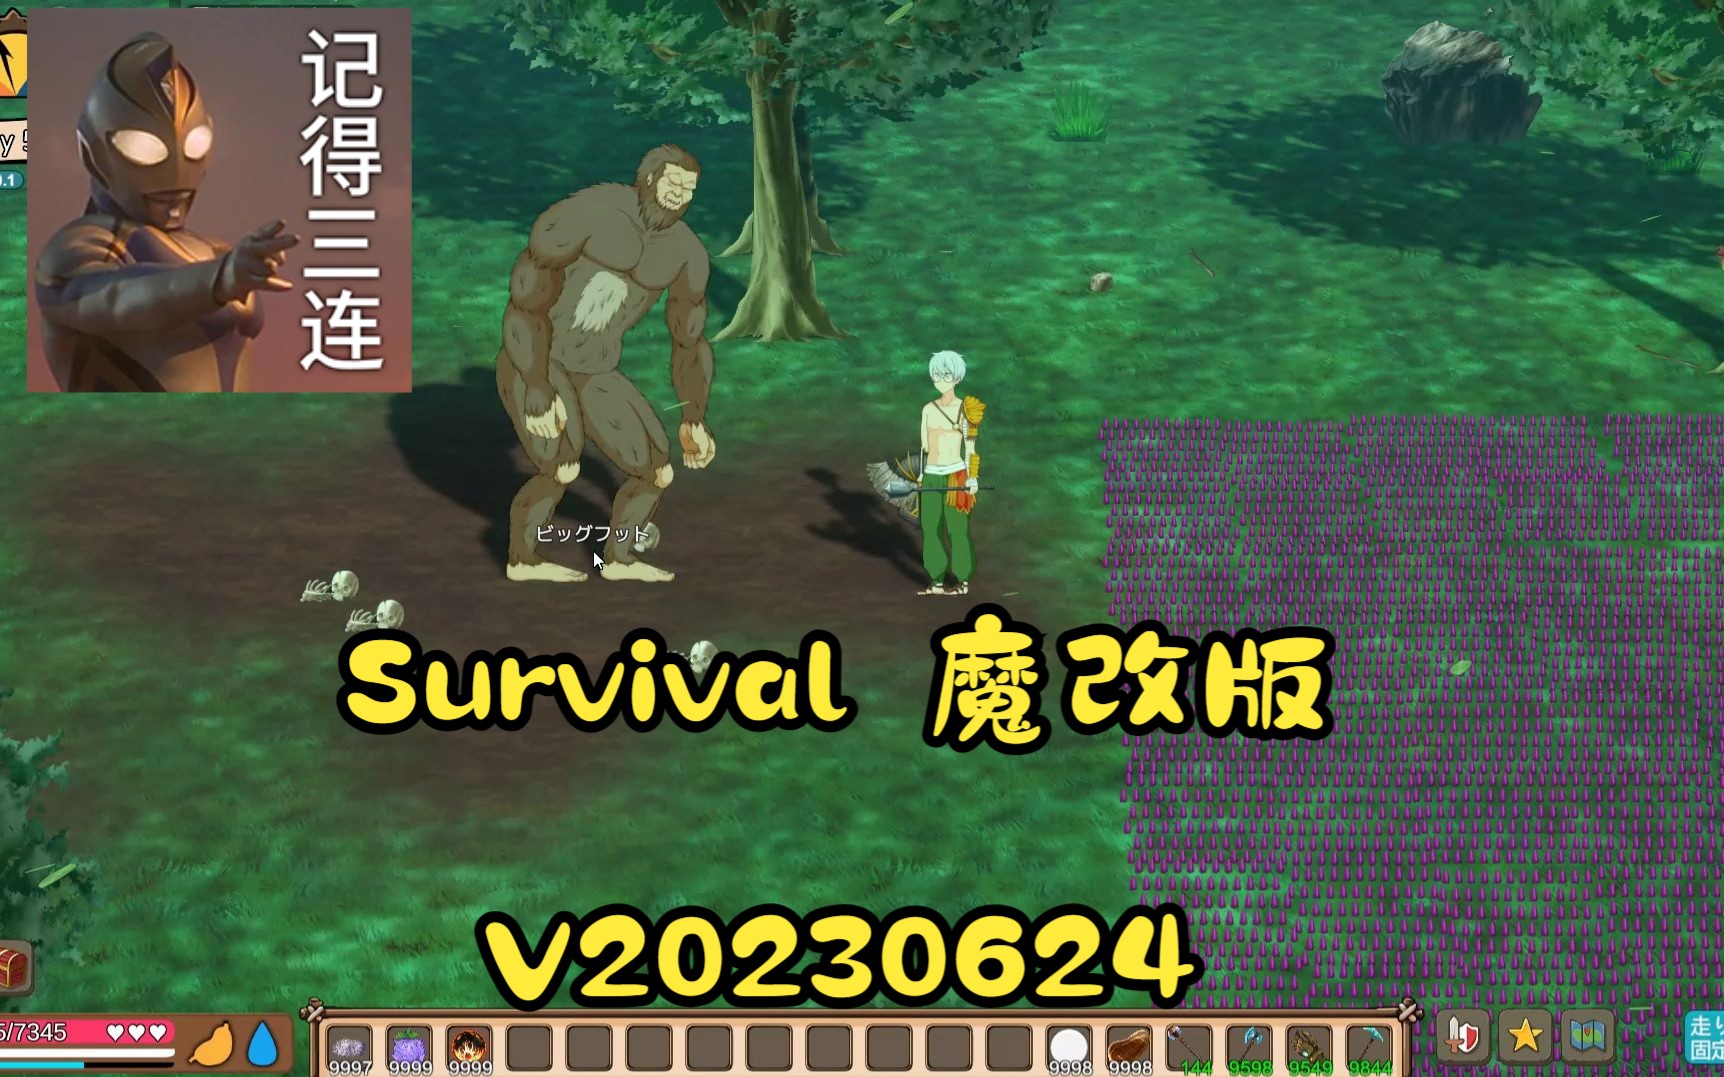 [Survival ]SurvivalGameProject 生存游戏1231最新原版加魔改